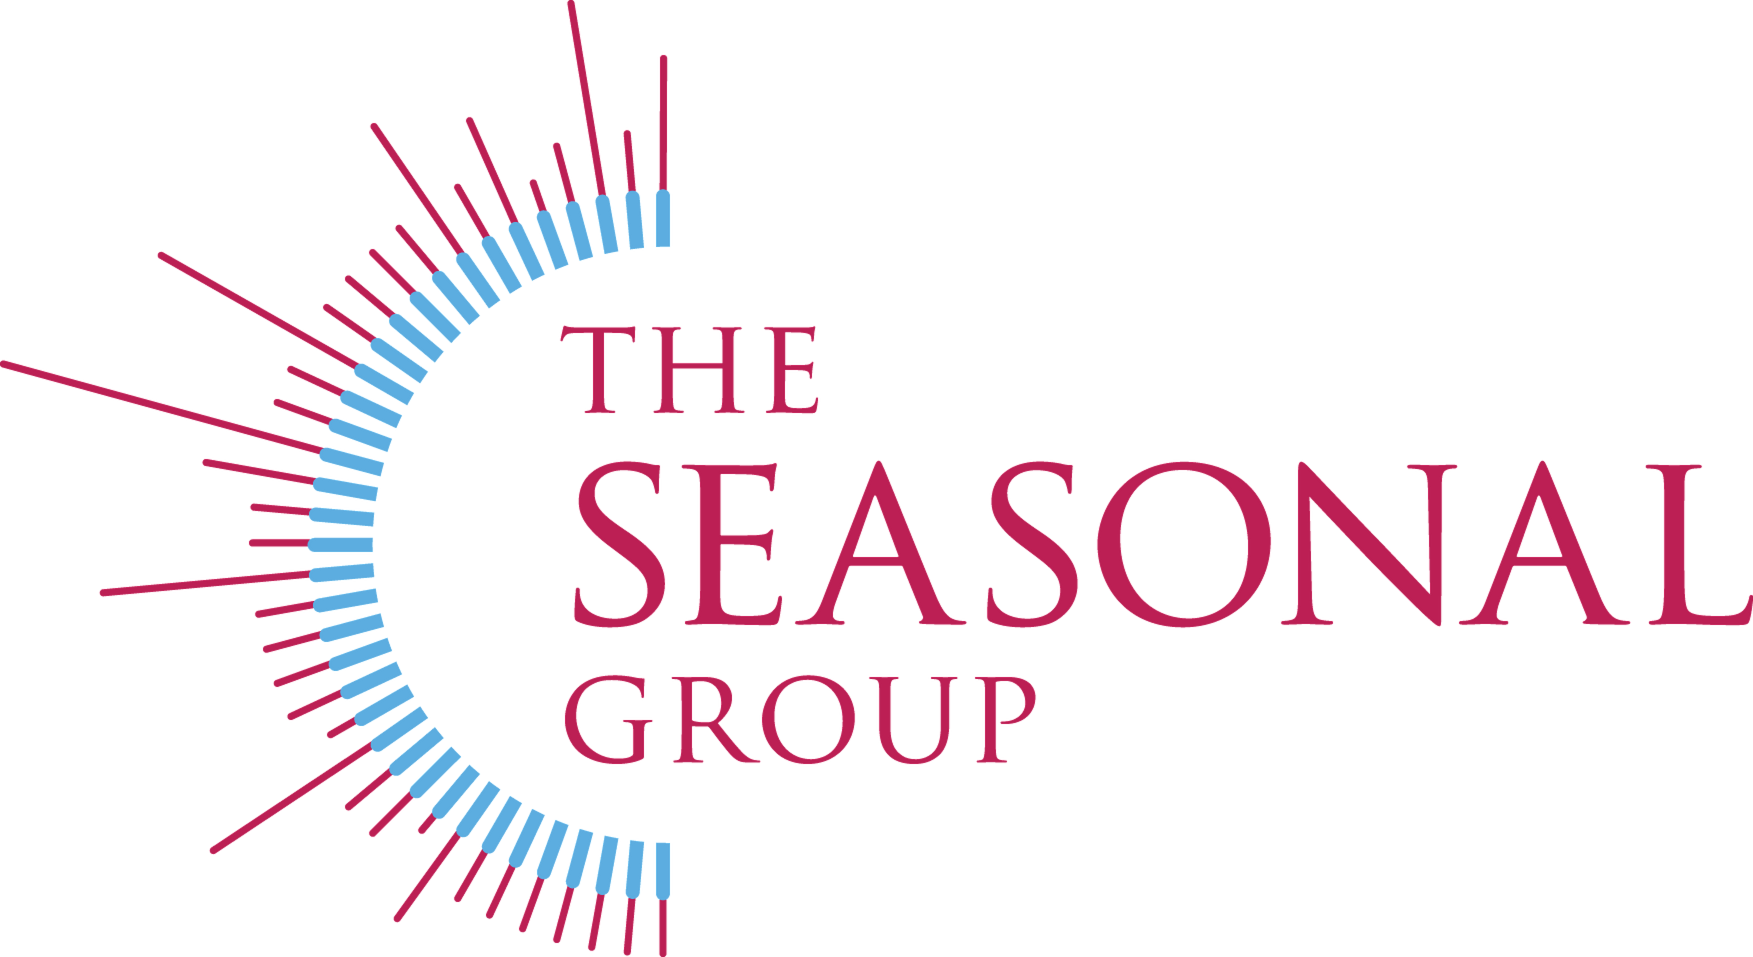 The Seasonal Group